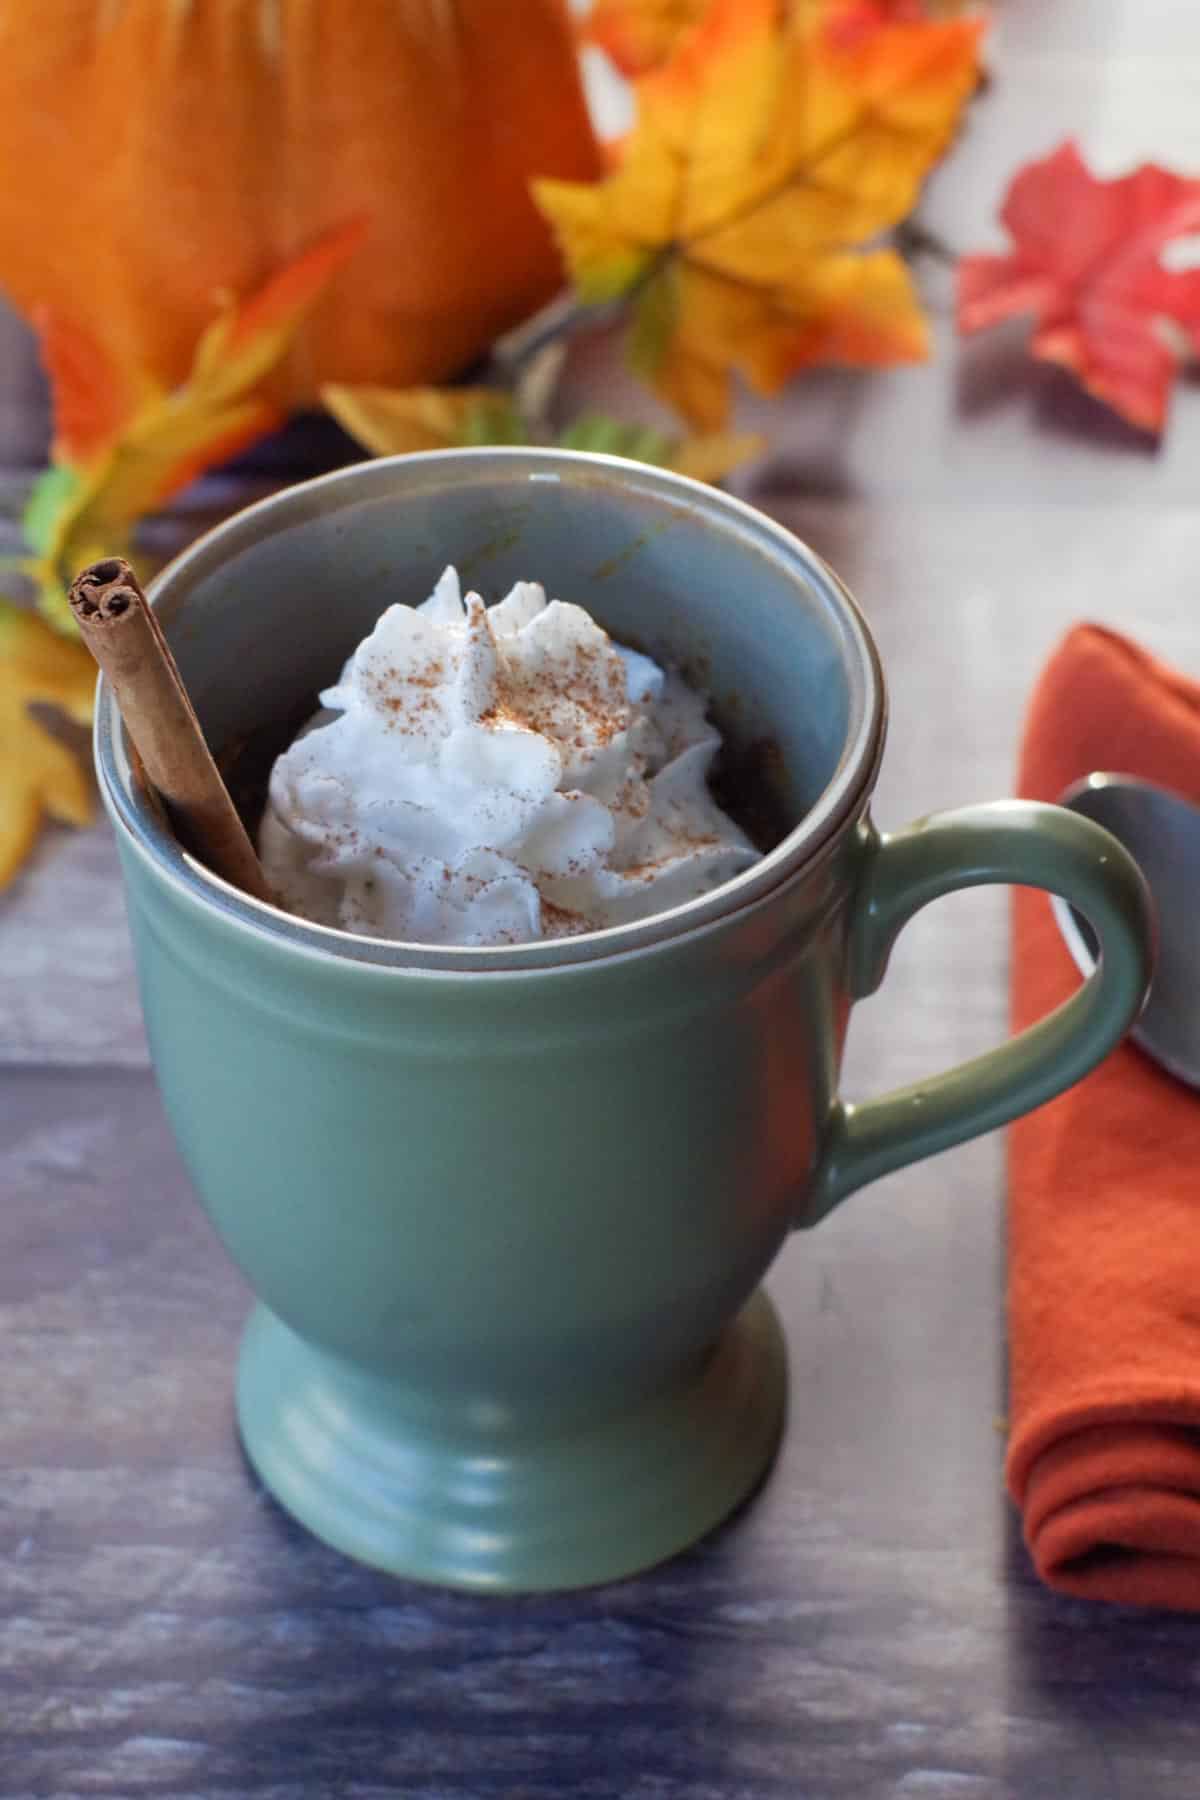 crustless pumpkin pie in a mug with whipped cream and a cinnamon stick